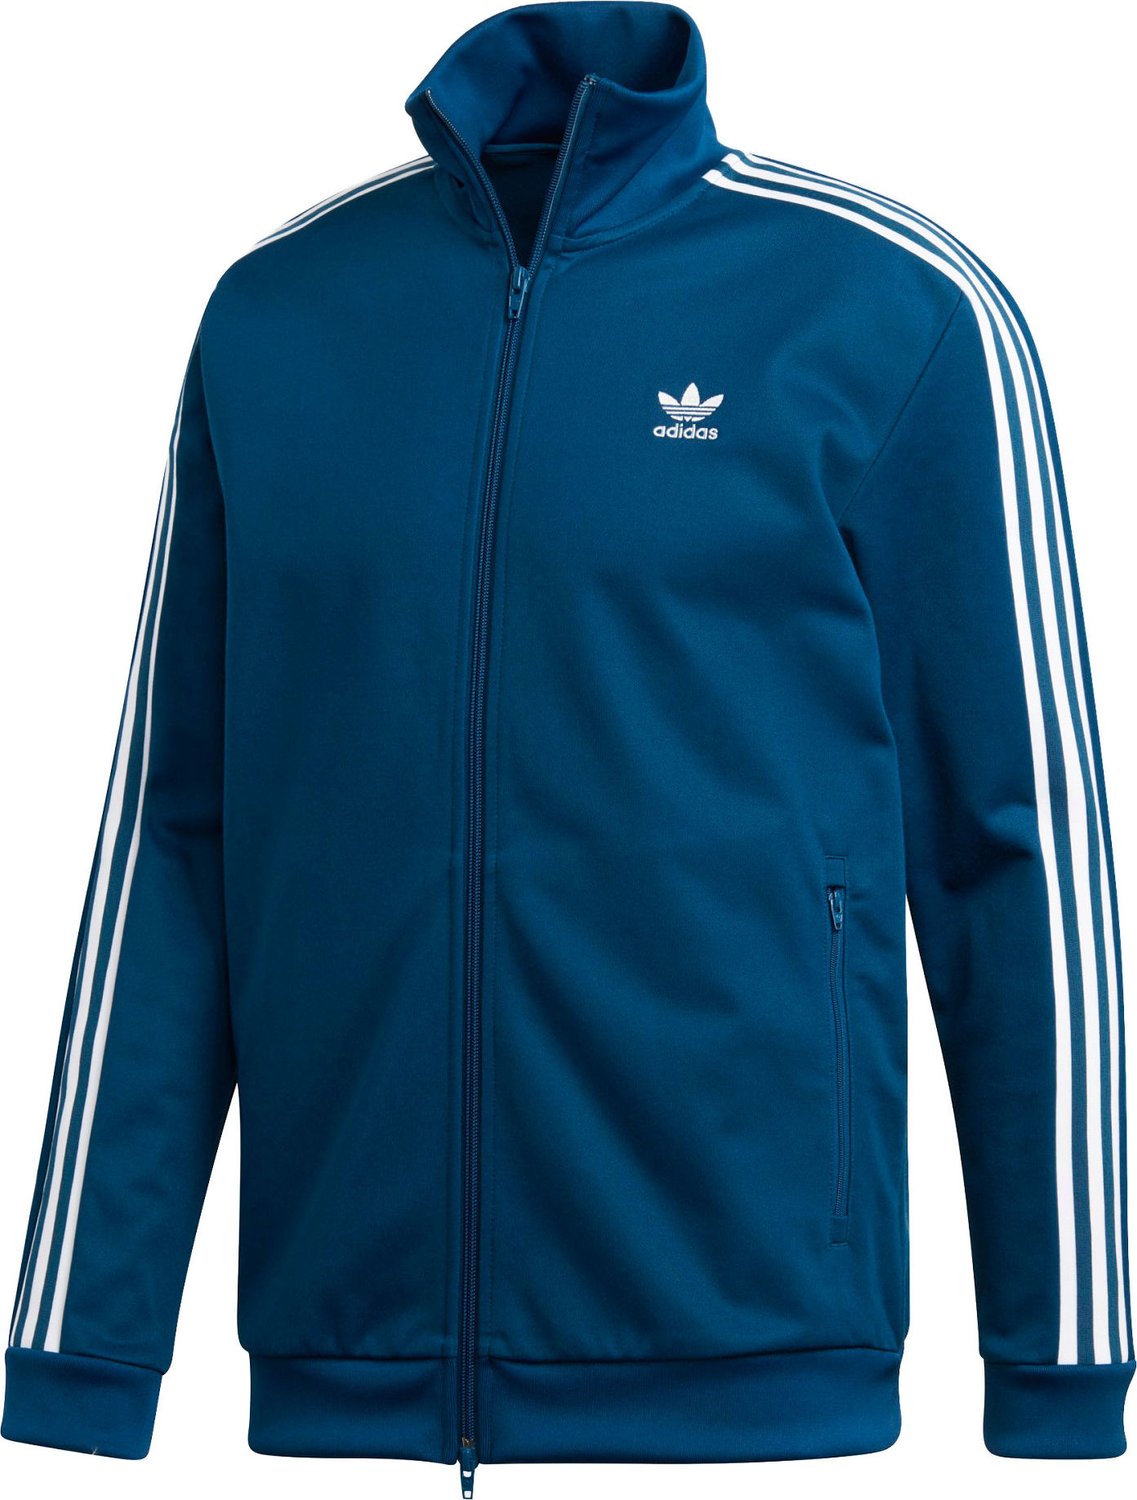 Bluza dresowa męska BB Adidas Originals - sklep internetowy Sport-Shop